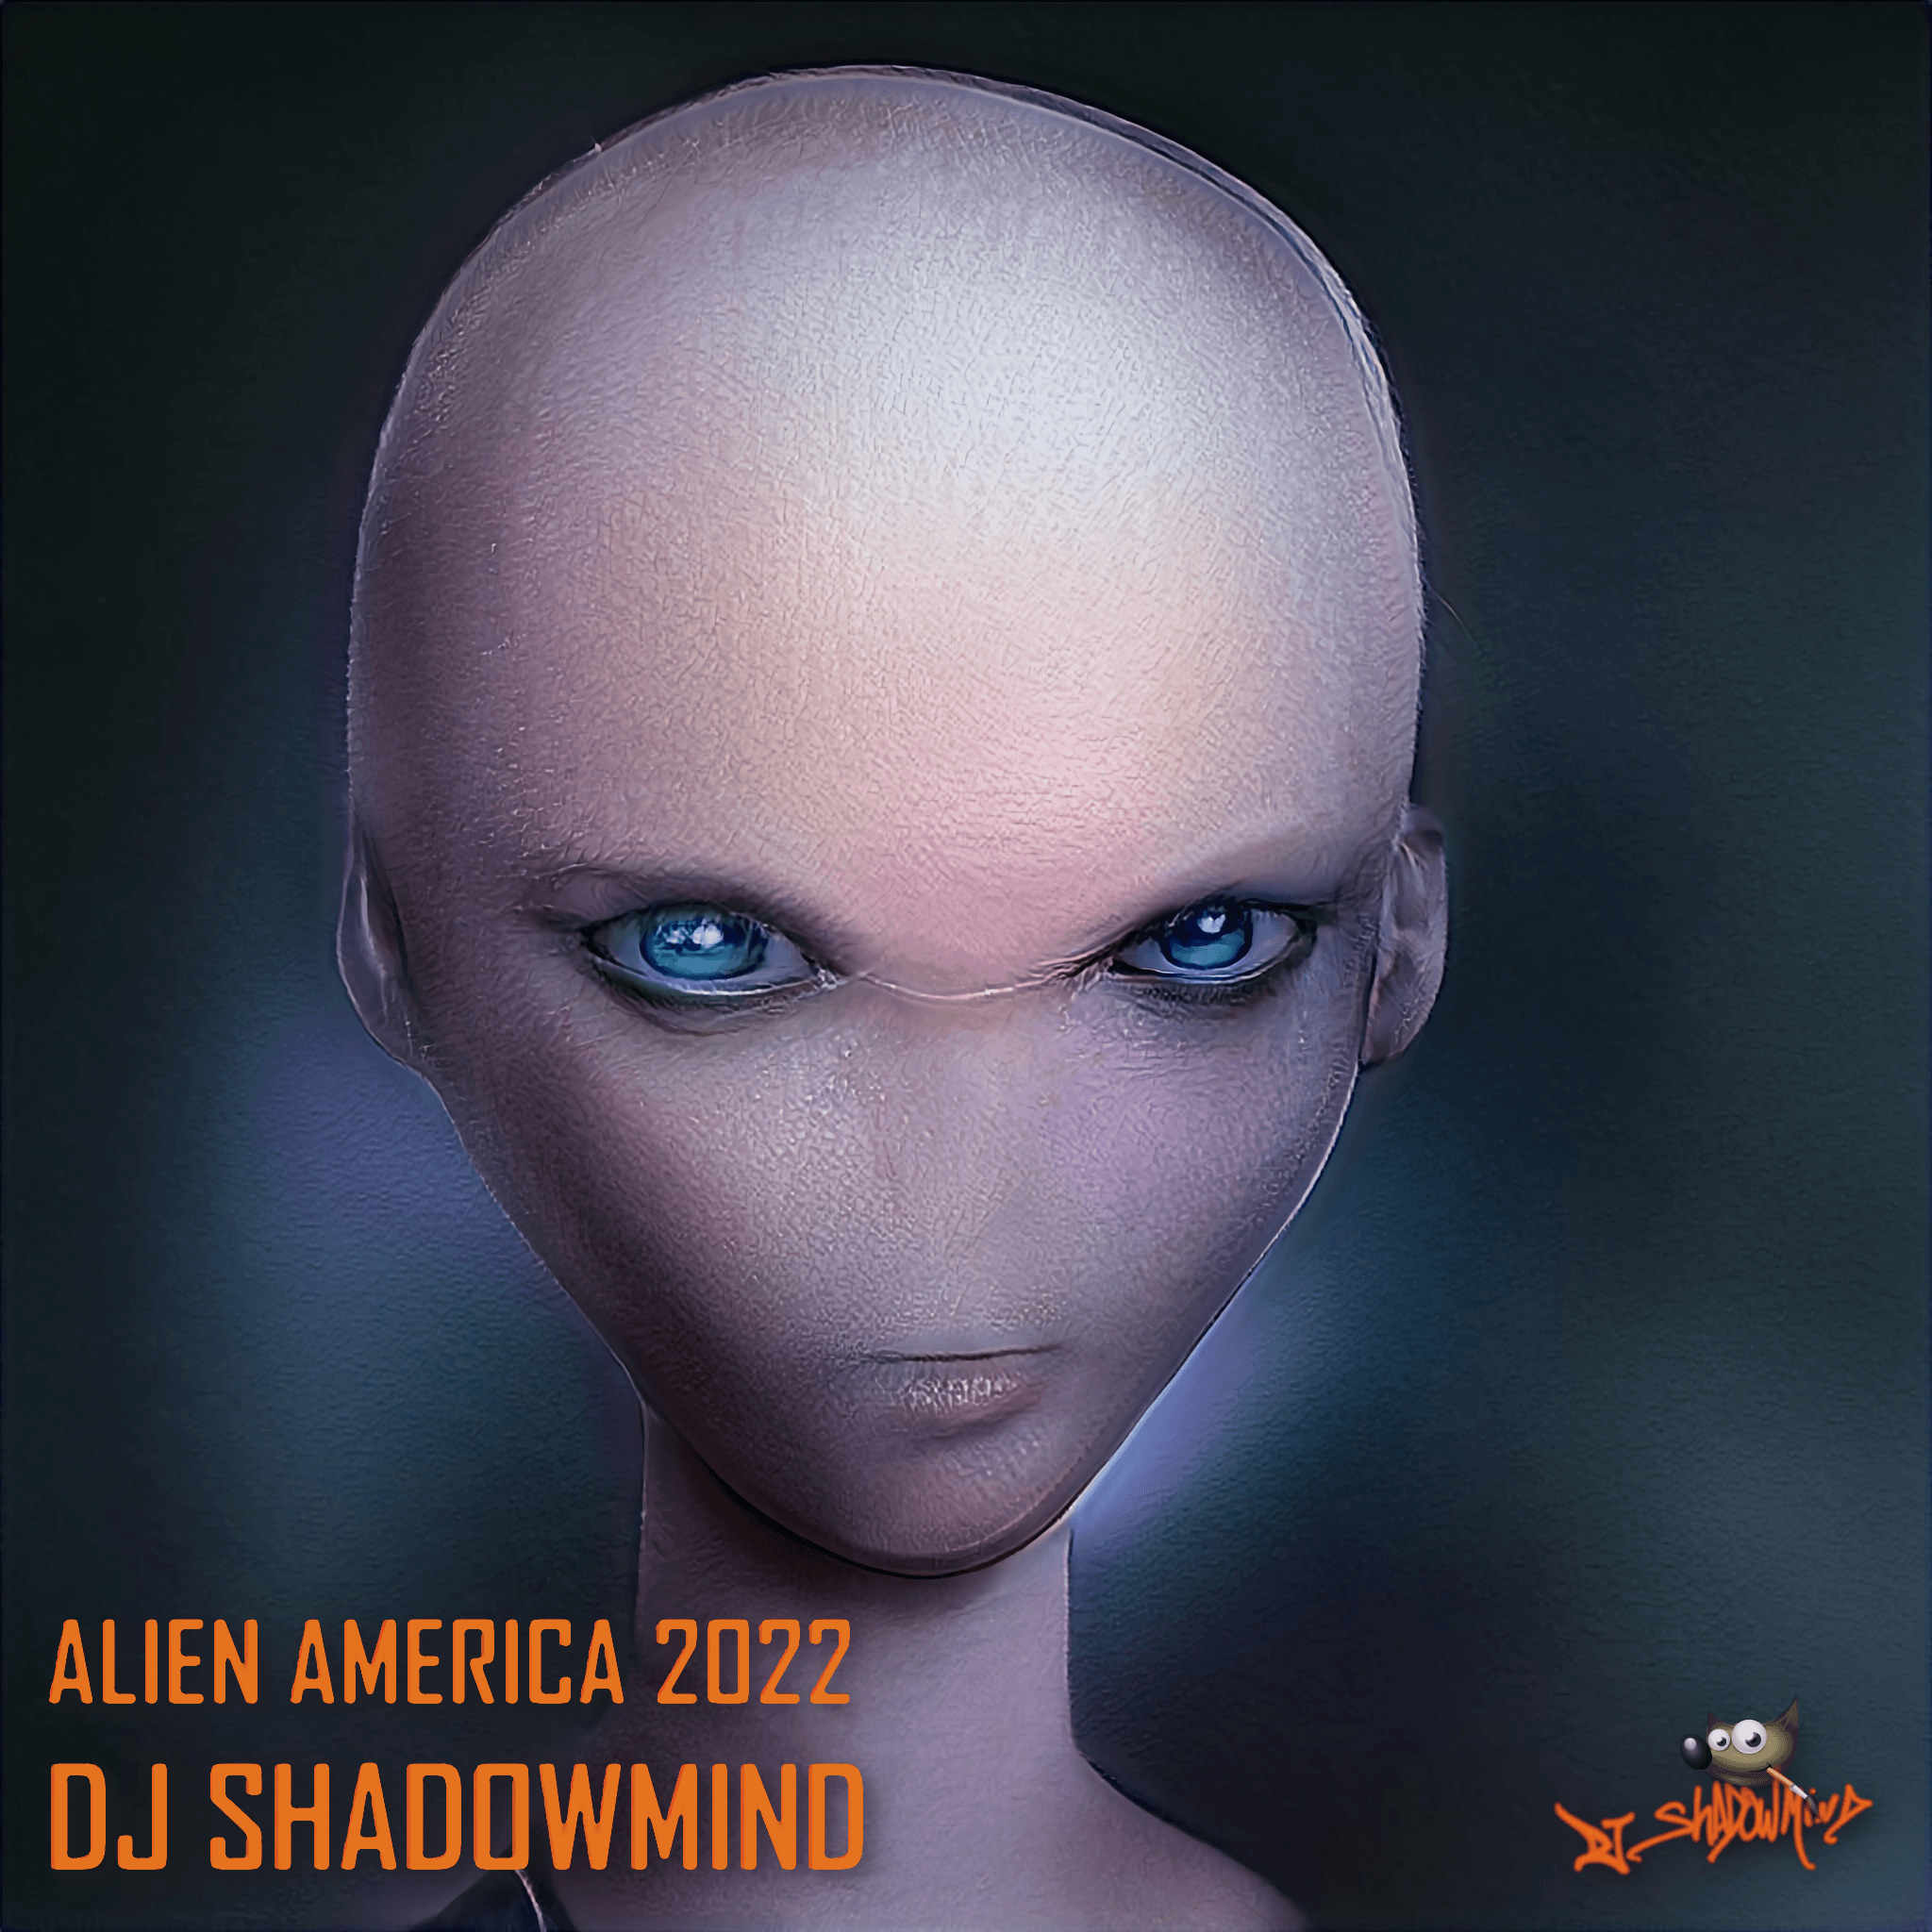 Alien America 2022 - Agent 107